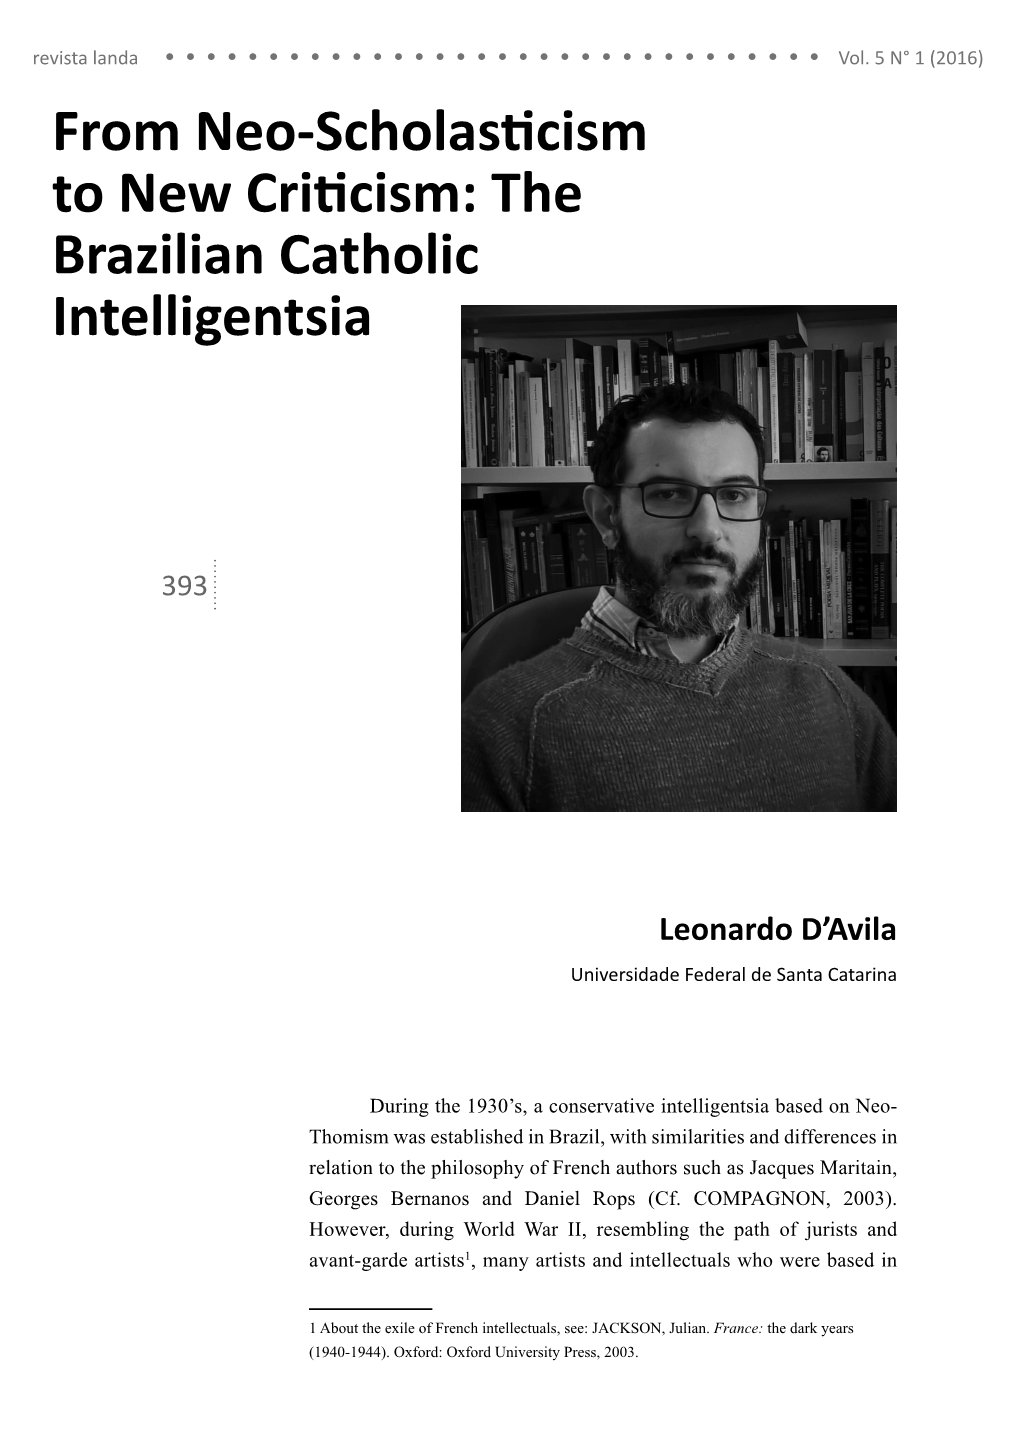 From Neo-Scholasticism to New Criticism: the Brazilian Catholic Intelligentsia